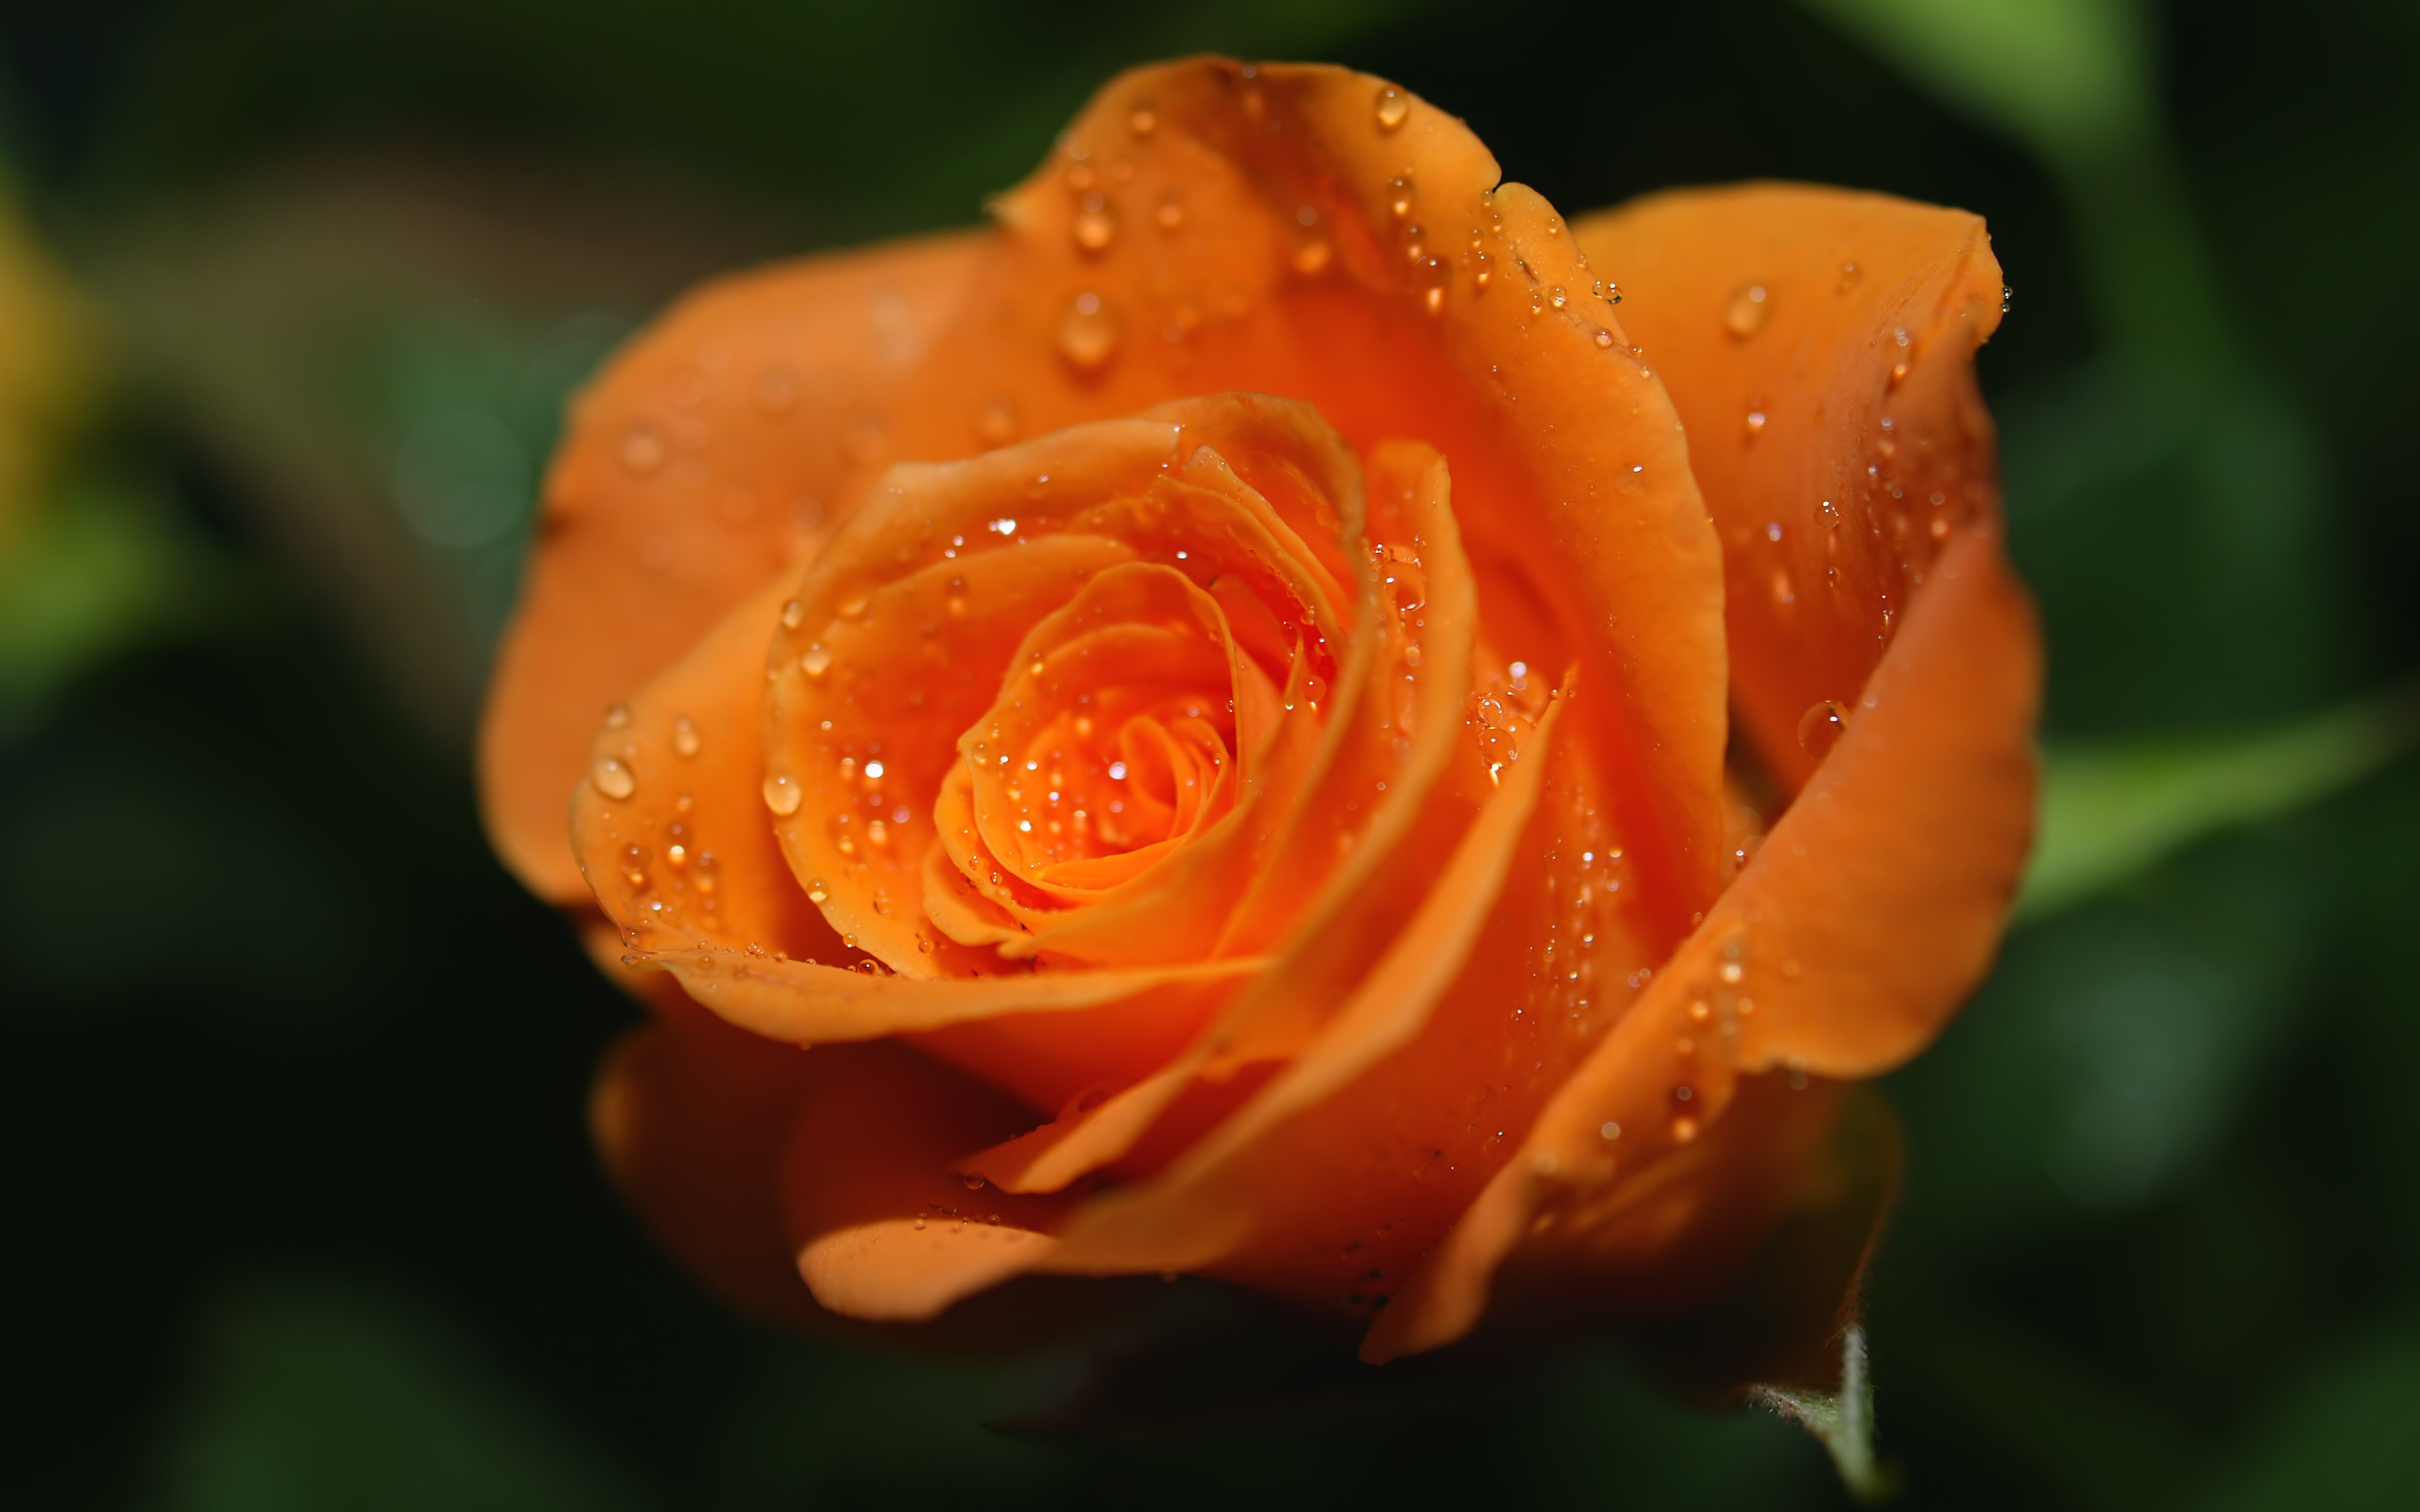 Картинка: Цветок, оранжевый, роза, капли, лепестки